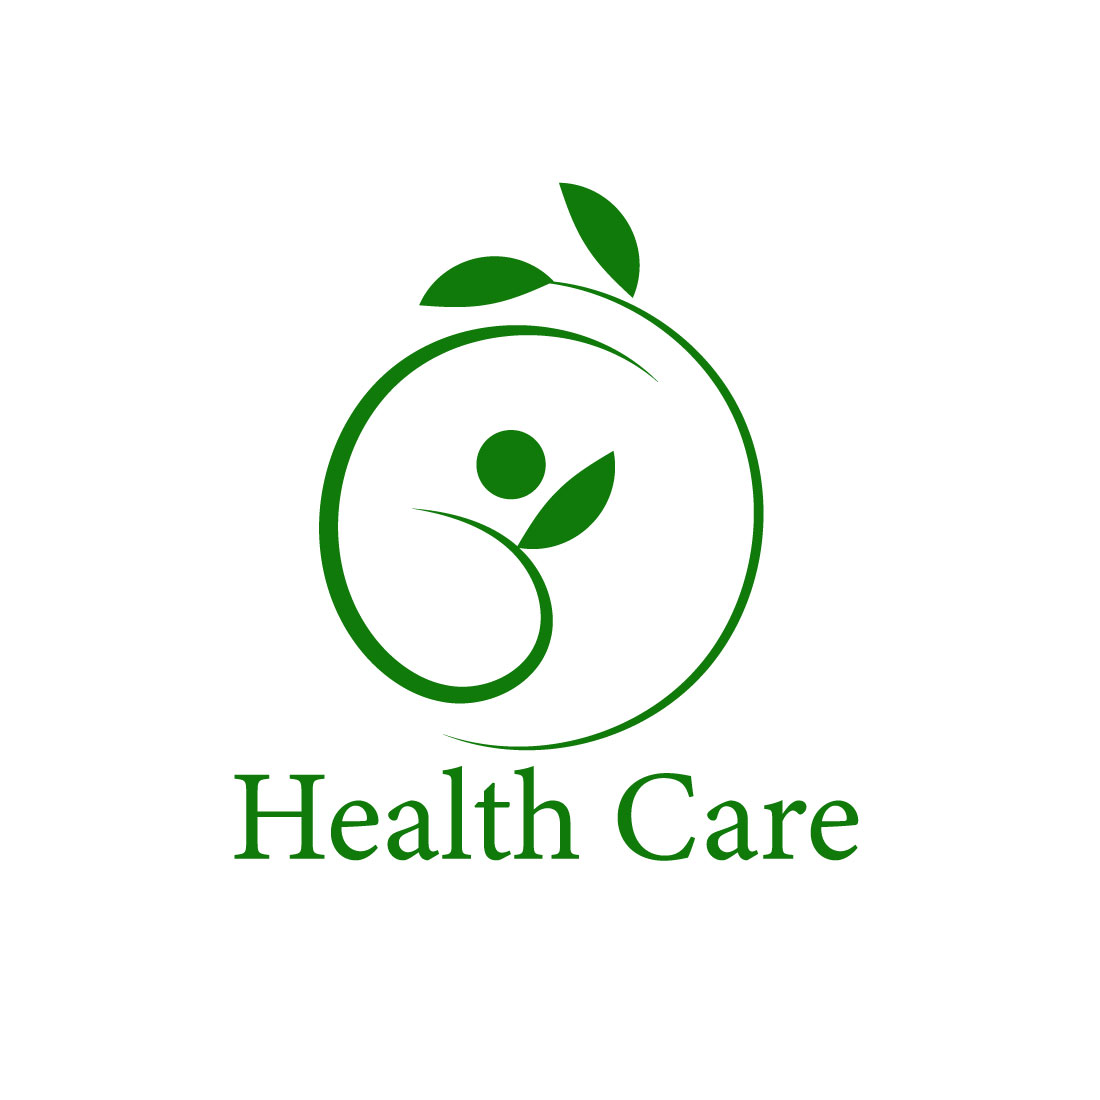 Free Health Minimalist Logo Design preview image.